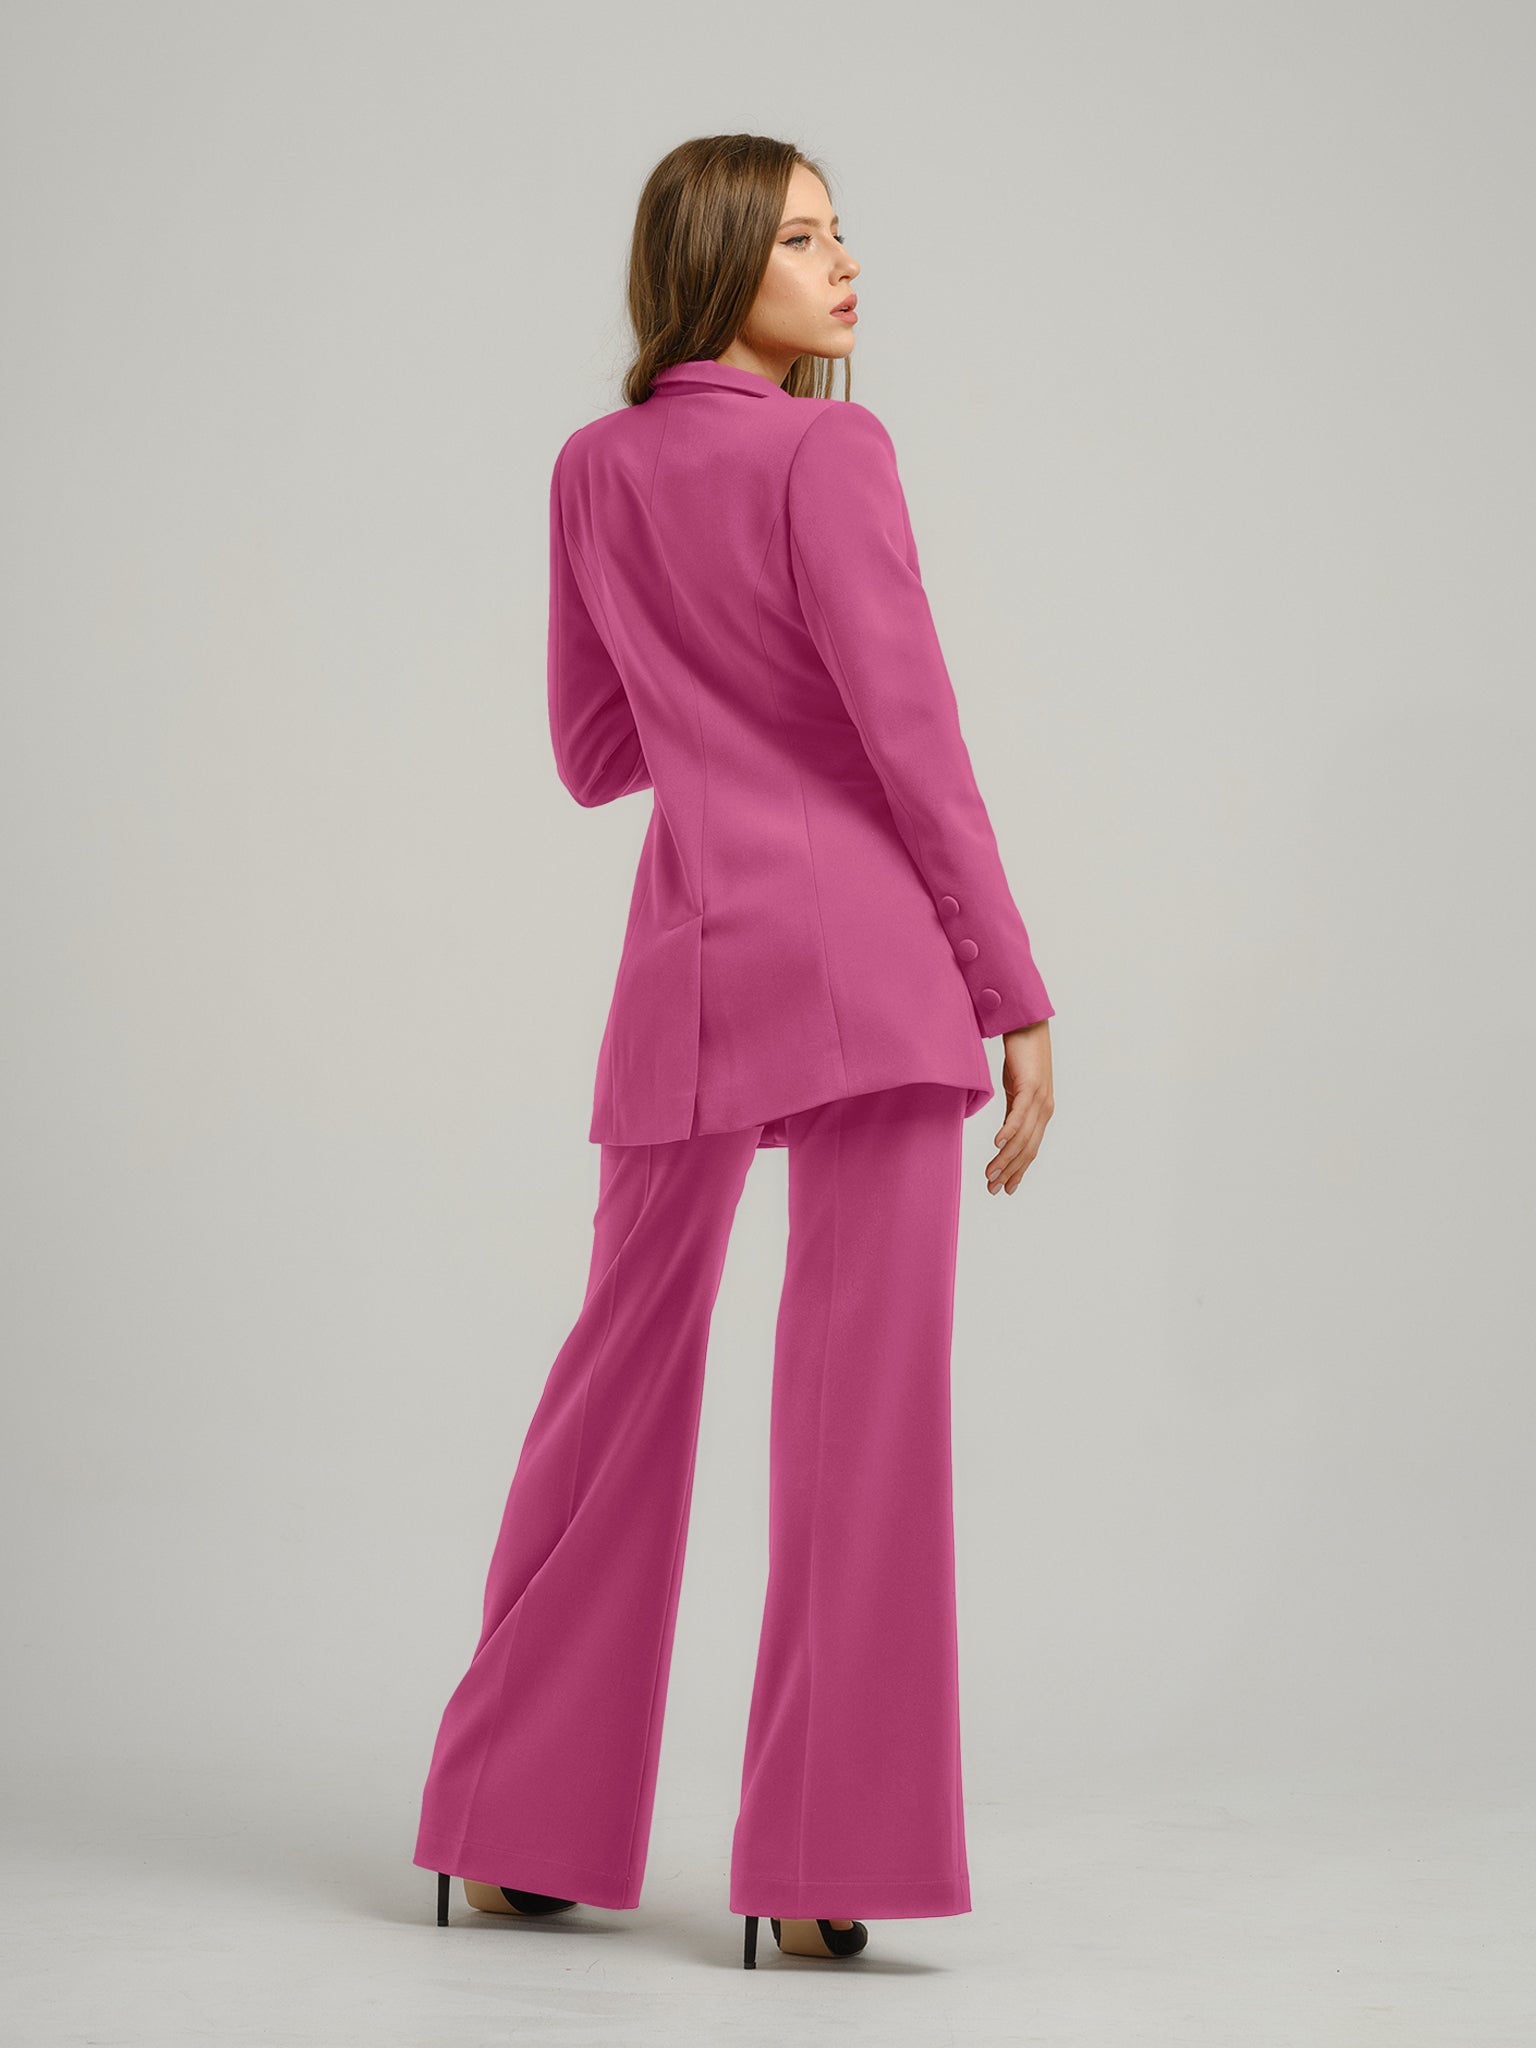 Sweet Desire Timeless Power Suit by Tia Dorraine Women's Luxury Fashion Designer Clothing Brand